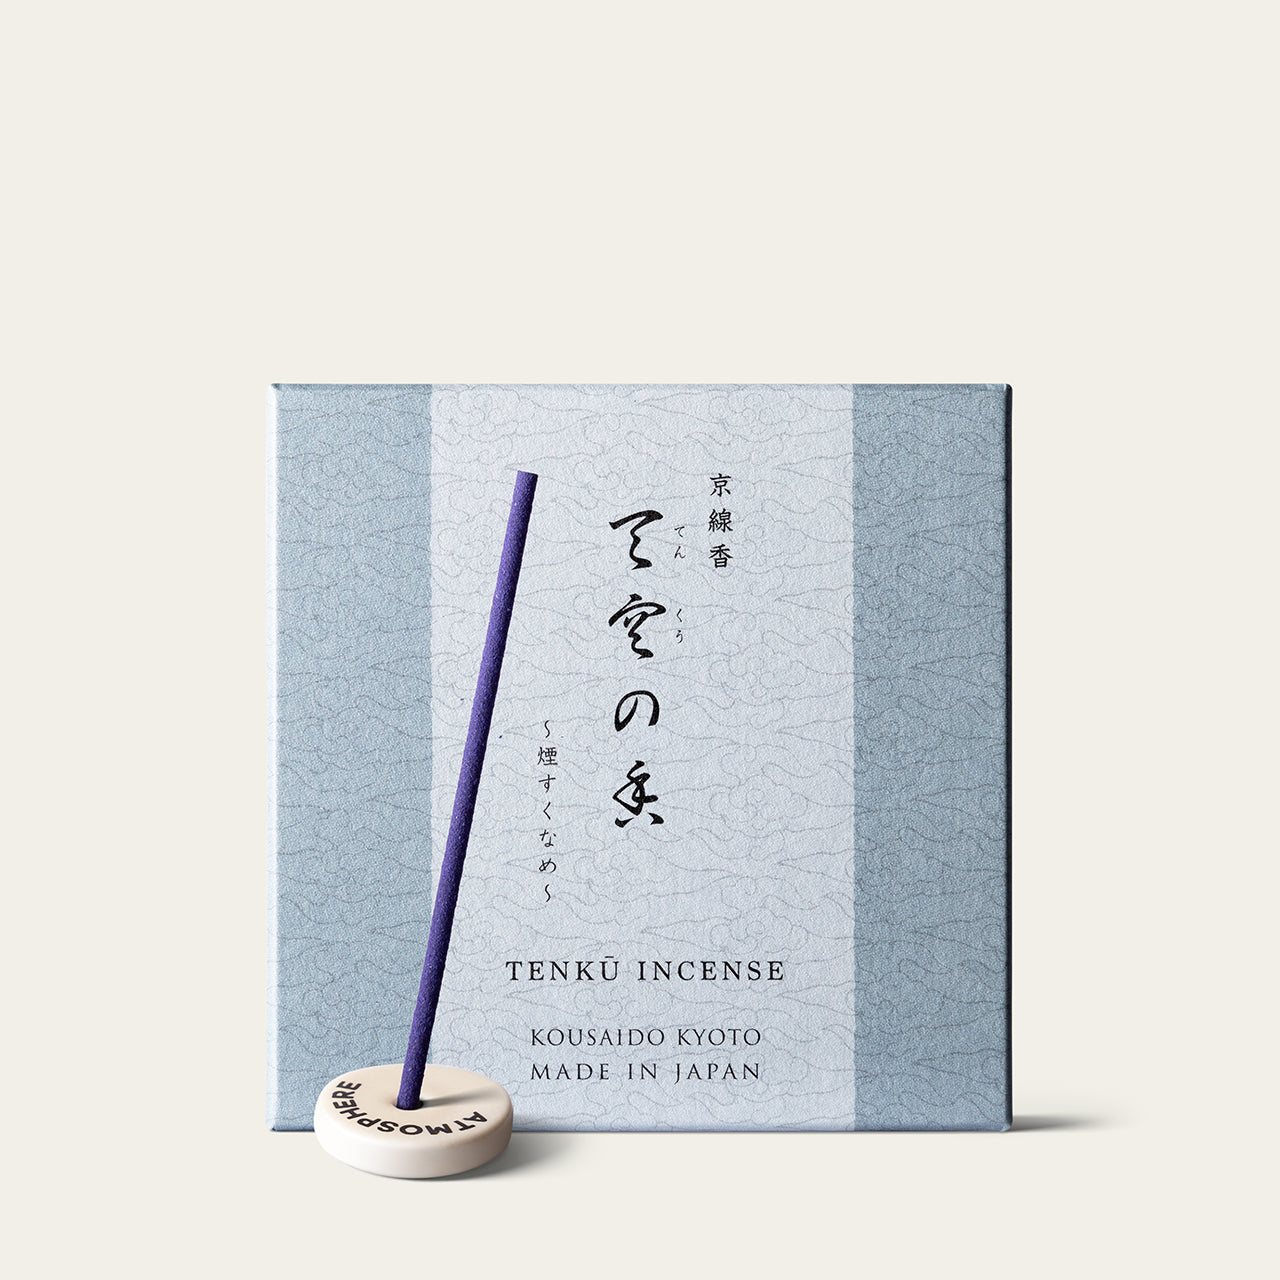 Kousaido Scent of Kyoto Symphony of the Sky Tenku Japanese incense sticks (200 sticks) with Atmosphere ceramic incense holder